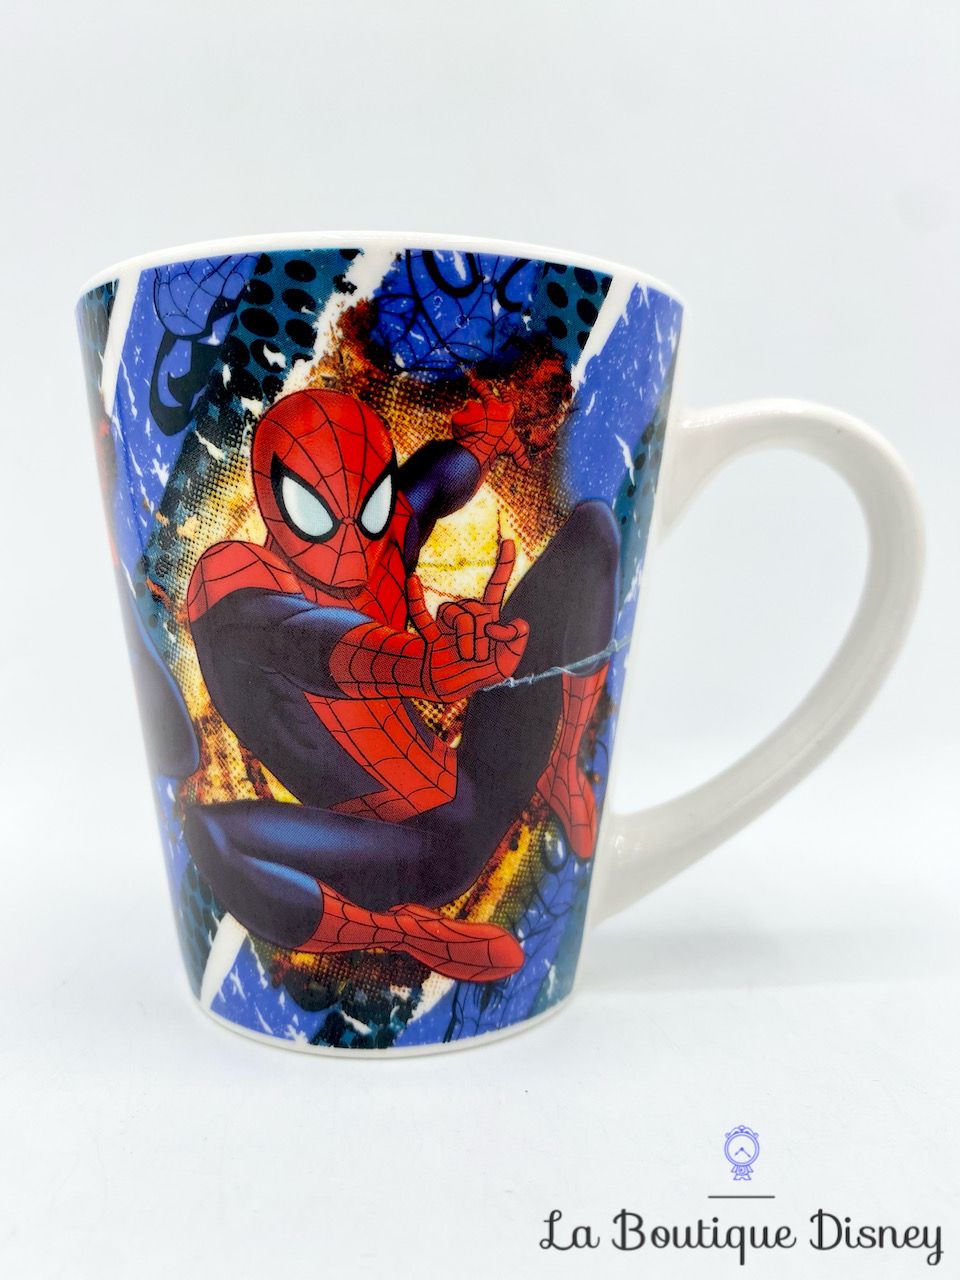 Tasse Spider Man Marvel mug homme araignée bleu rouge